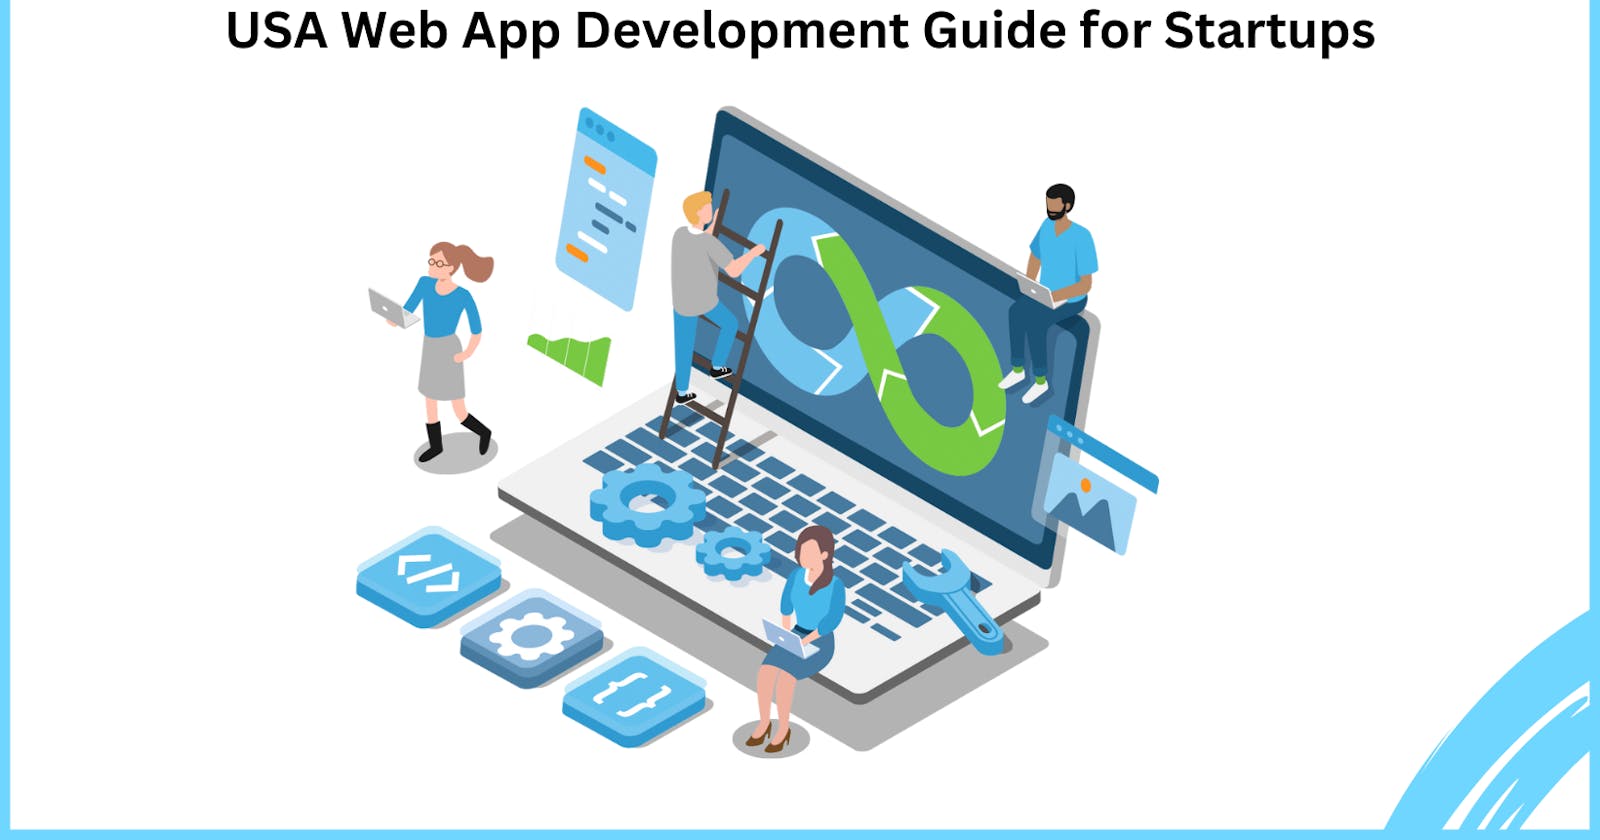 USA Web App Development Guide for Startups